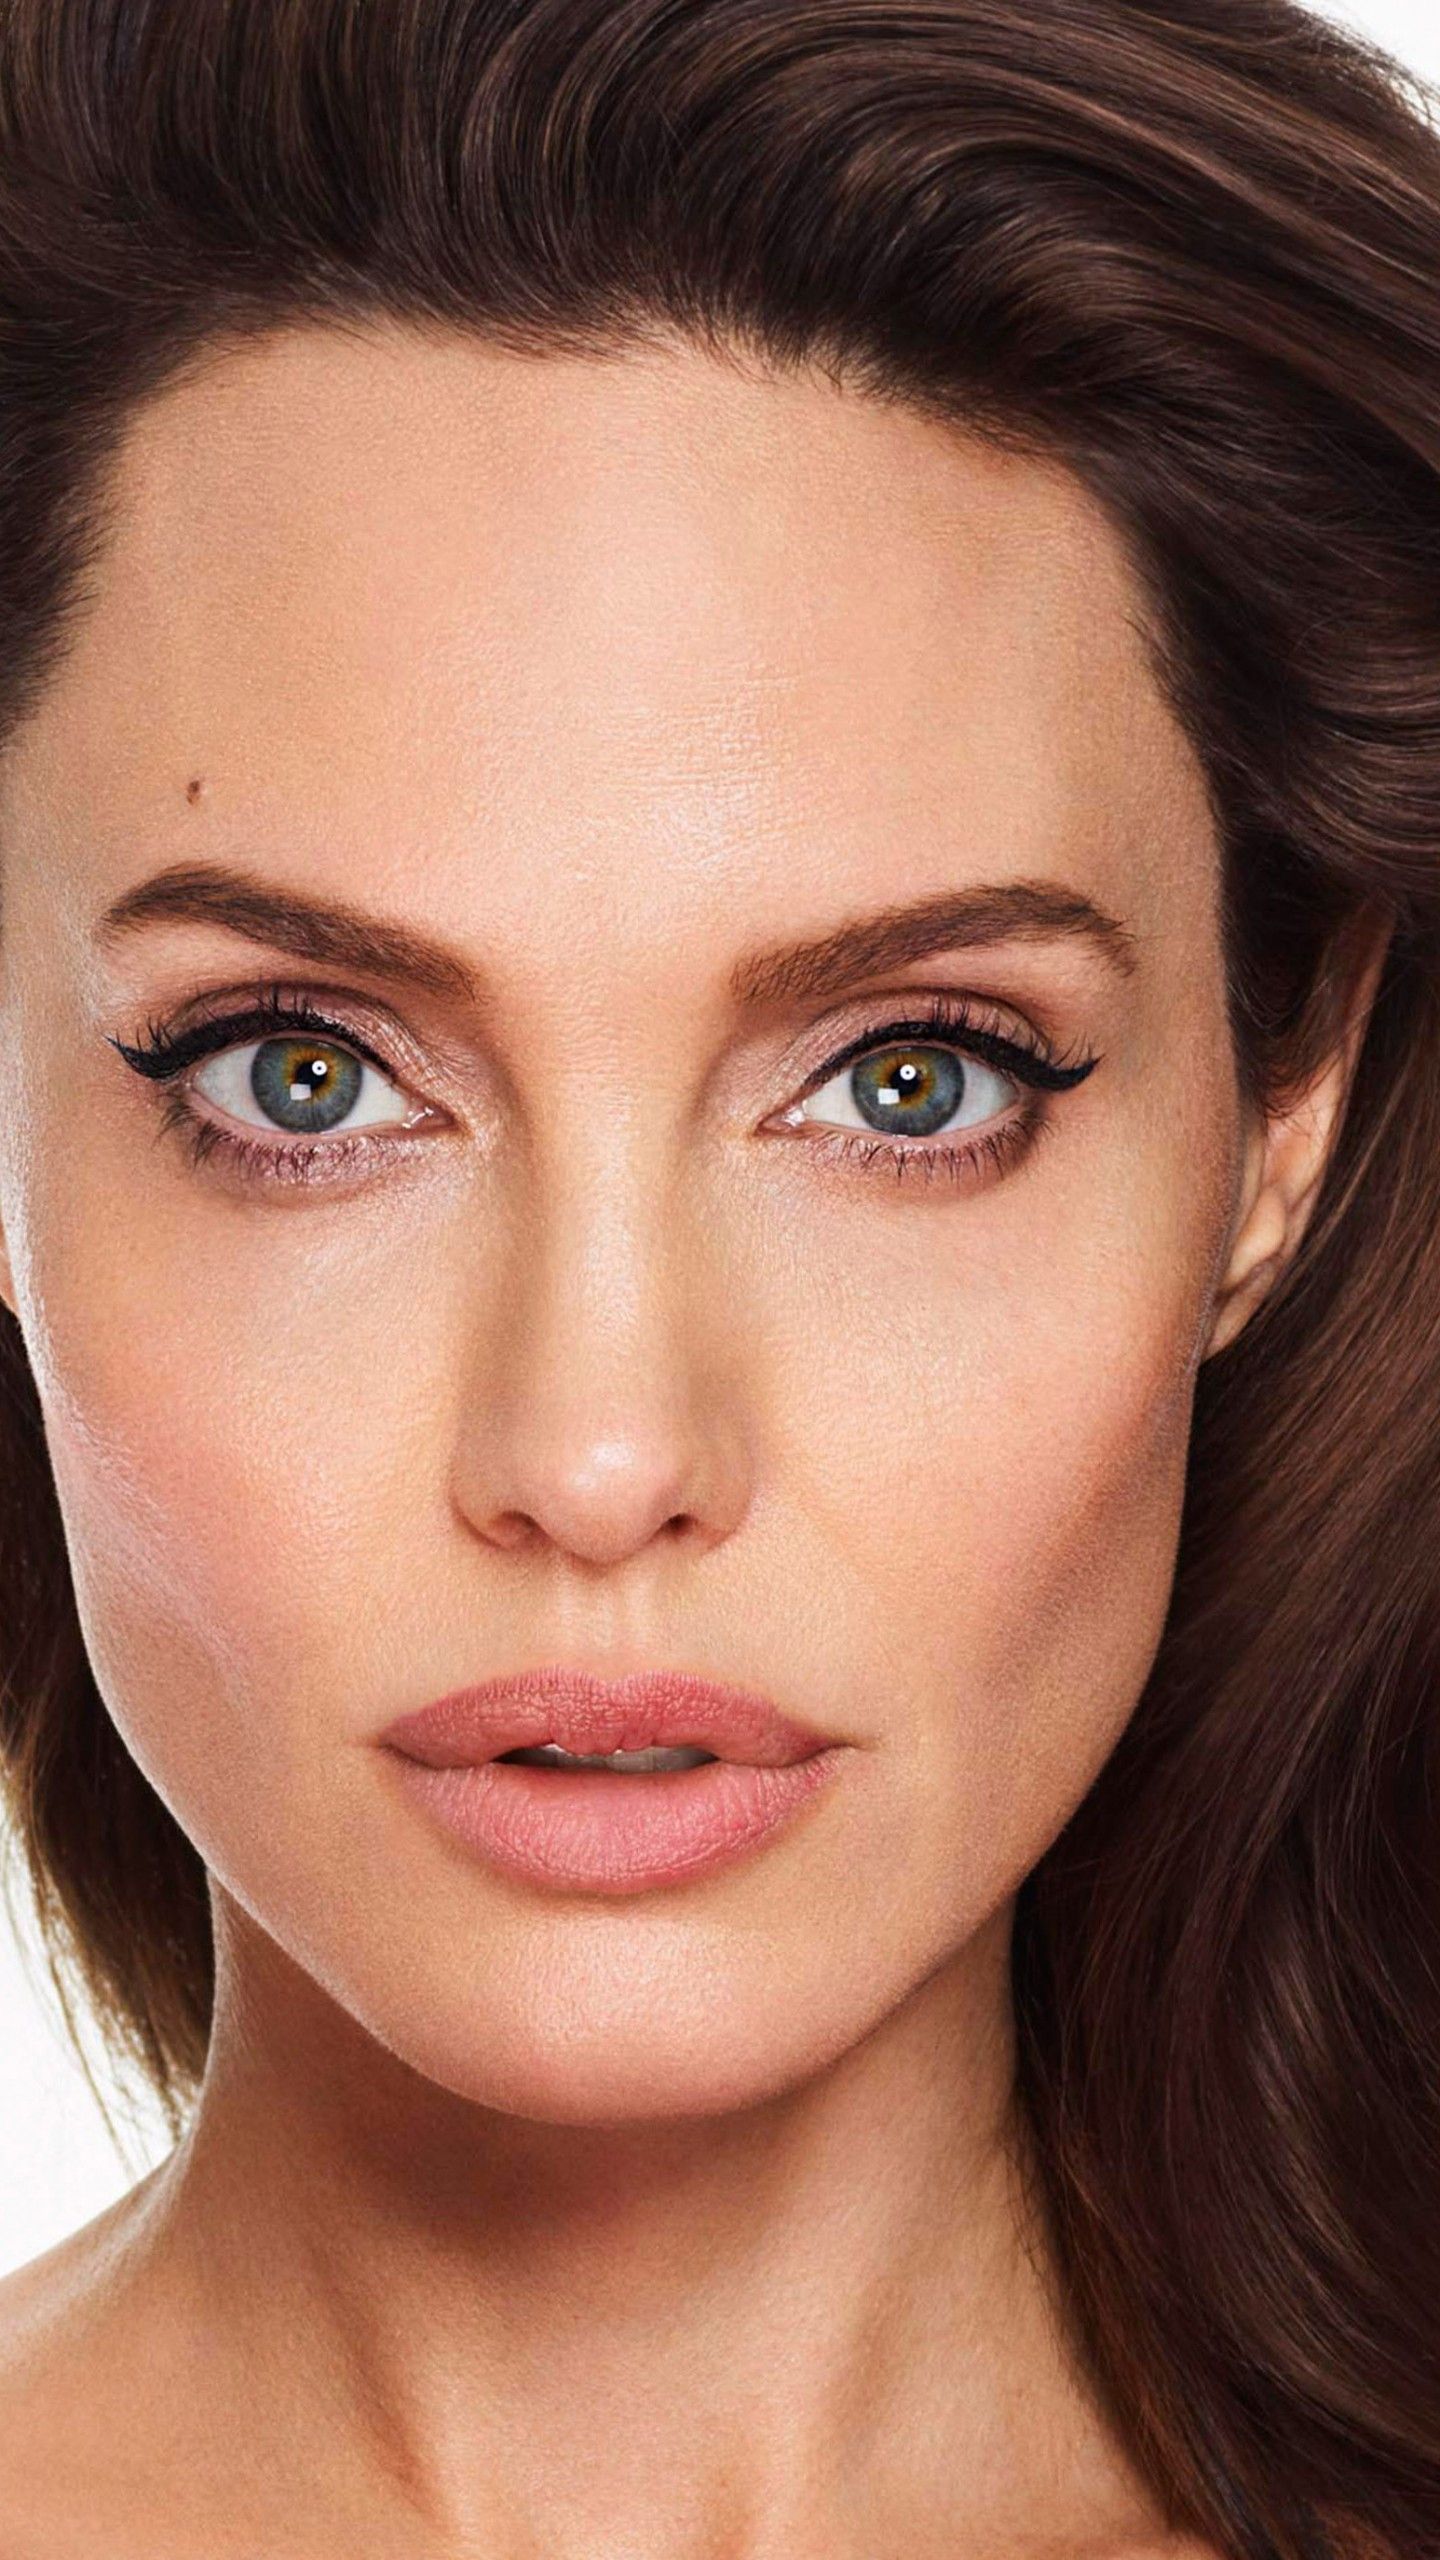 Wallpaper Angelina Jolie, 4K, Celebrities / Editor's Picks,. Wallpaper for iPhone, Android, Mobile and Desktop